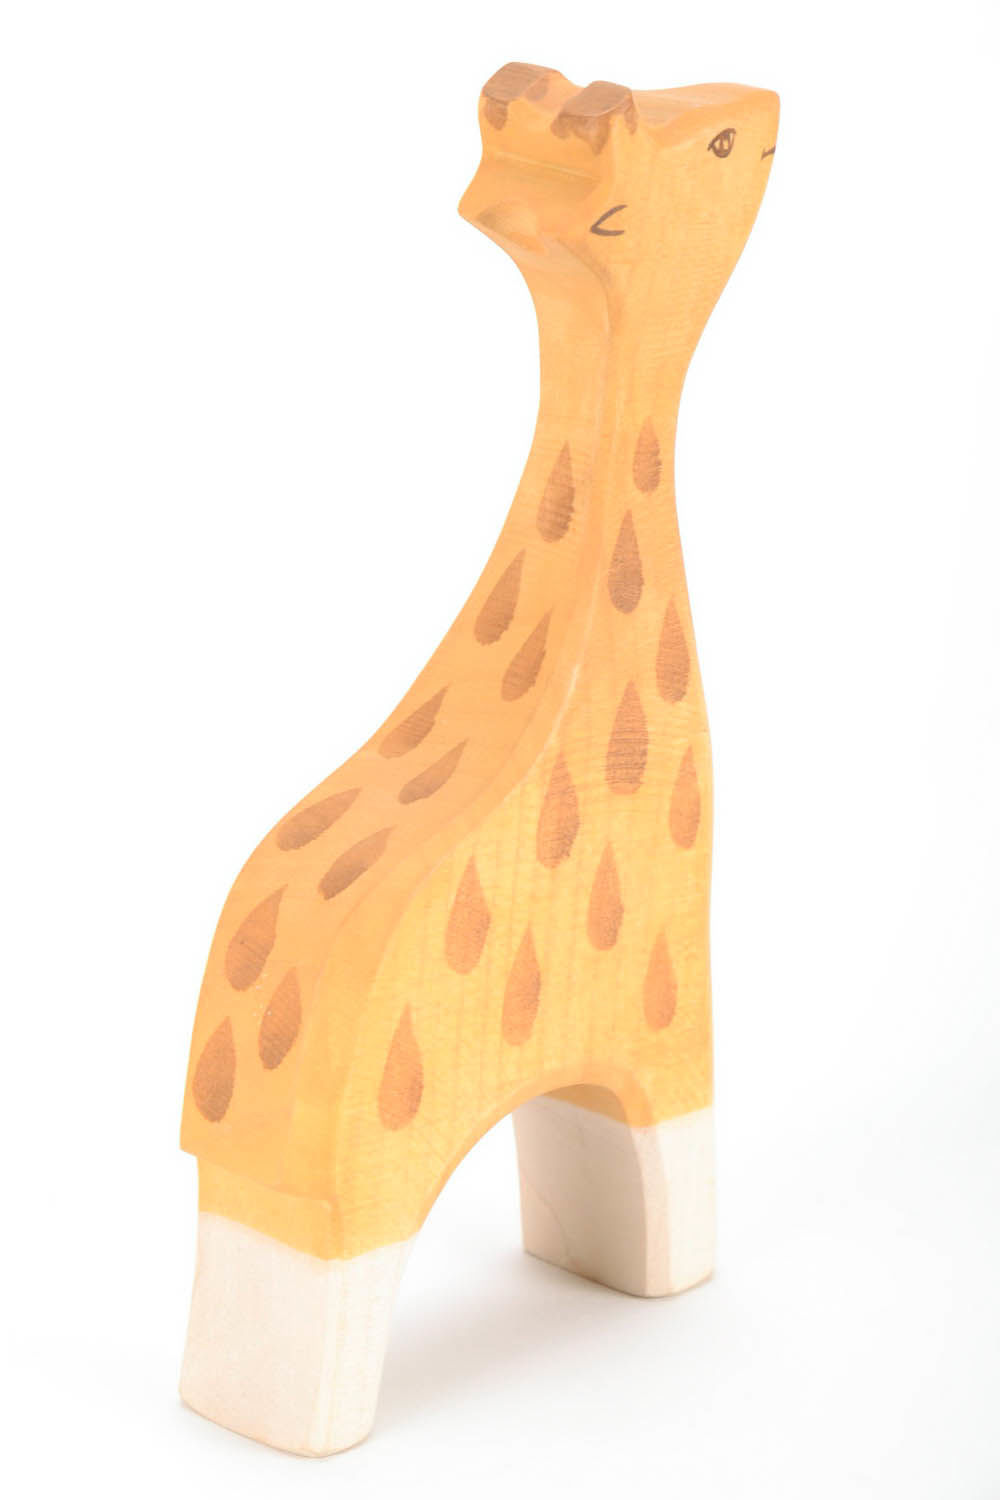 Jouet en bois artisanal Petite girafe  photo 4